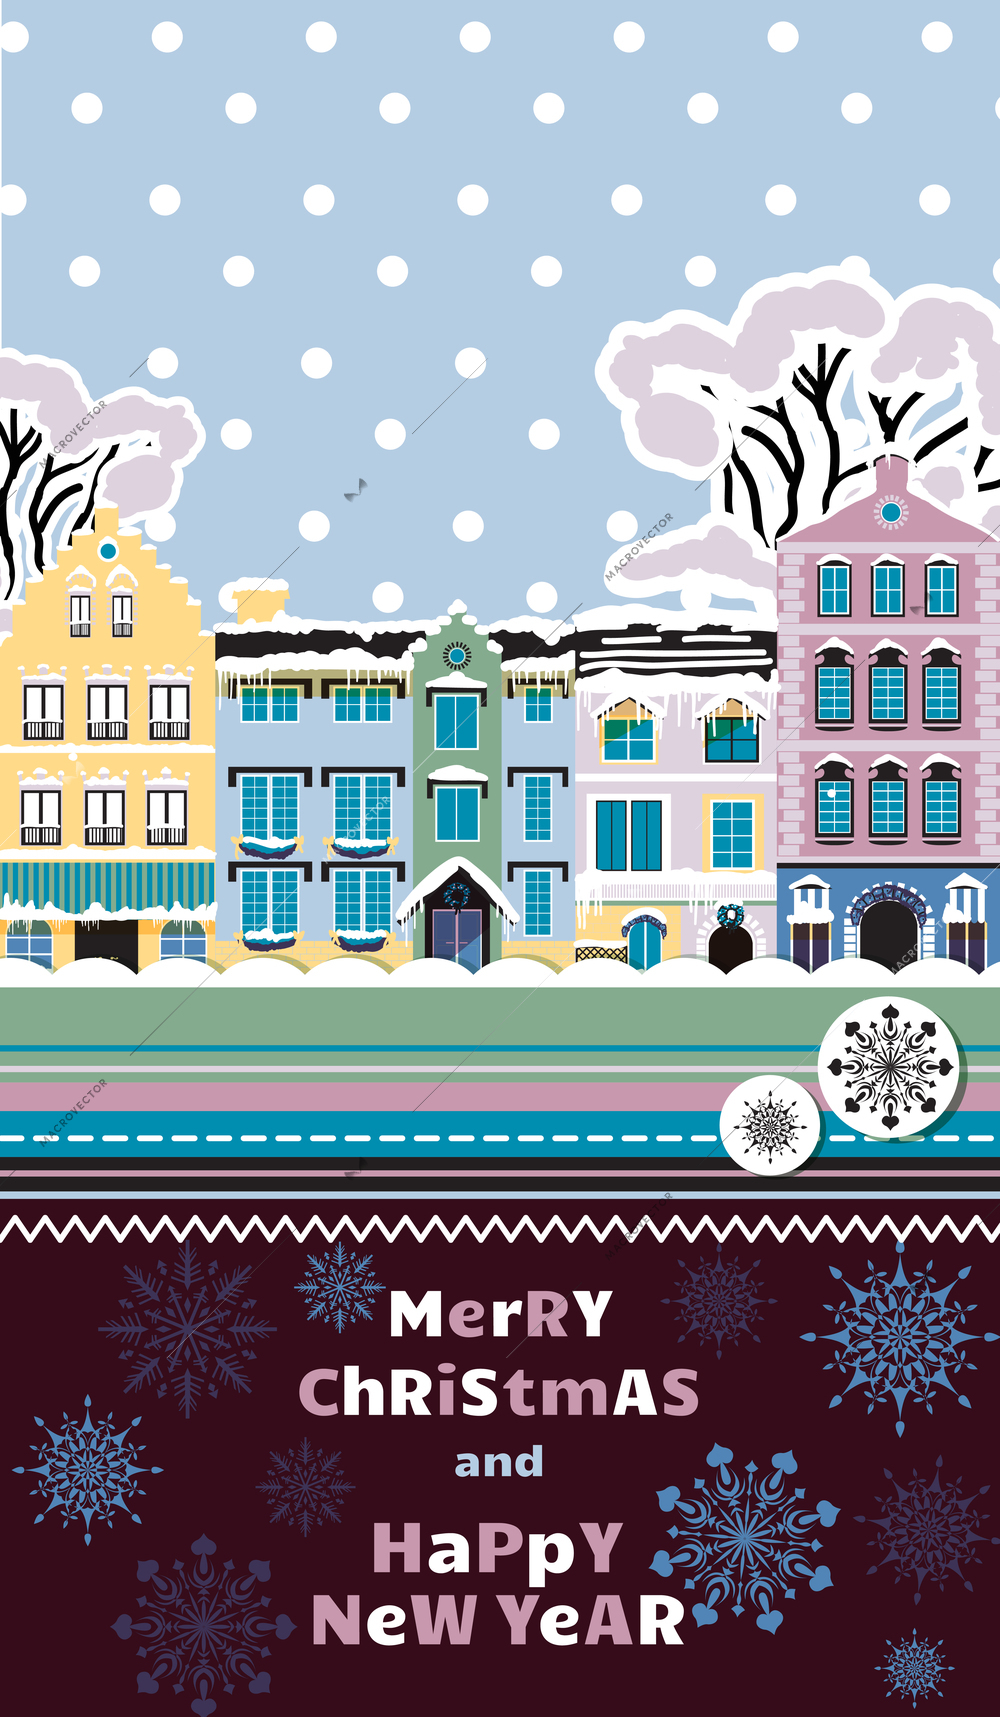 Christmas snowflakes invitation card template vector illustration